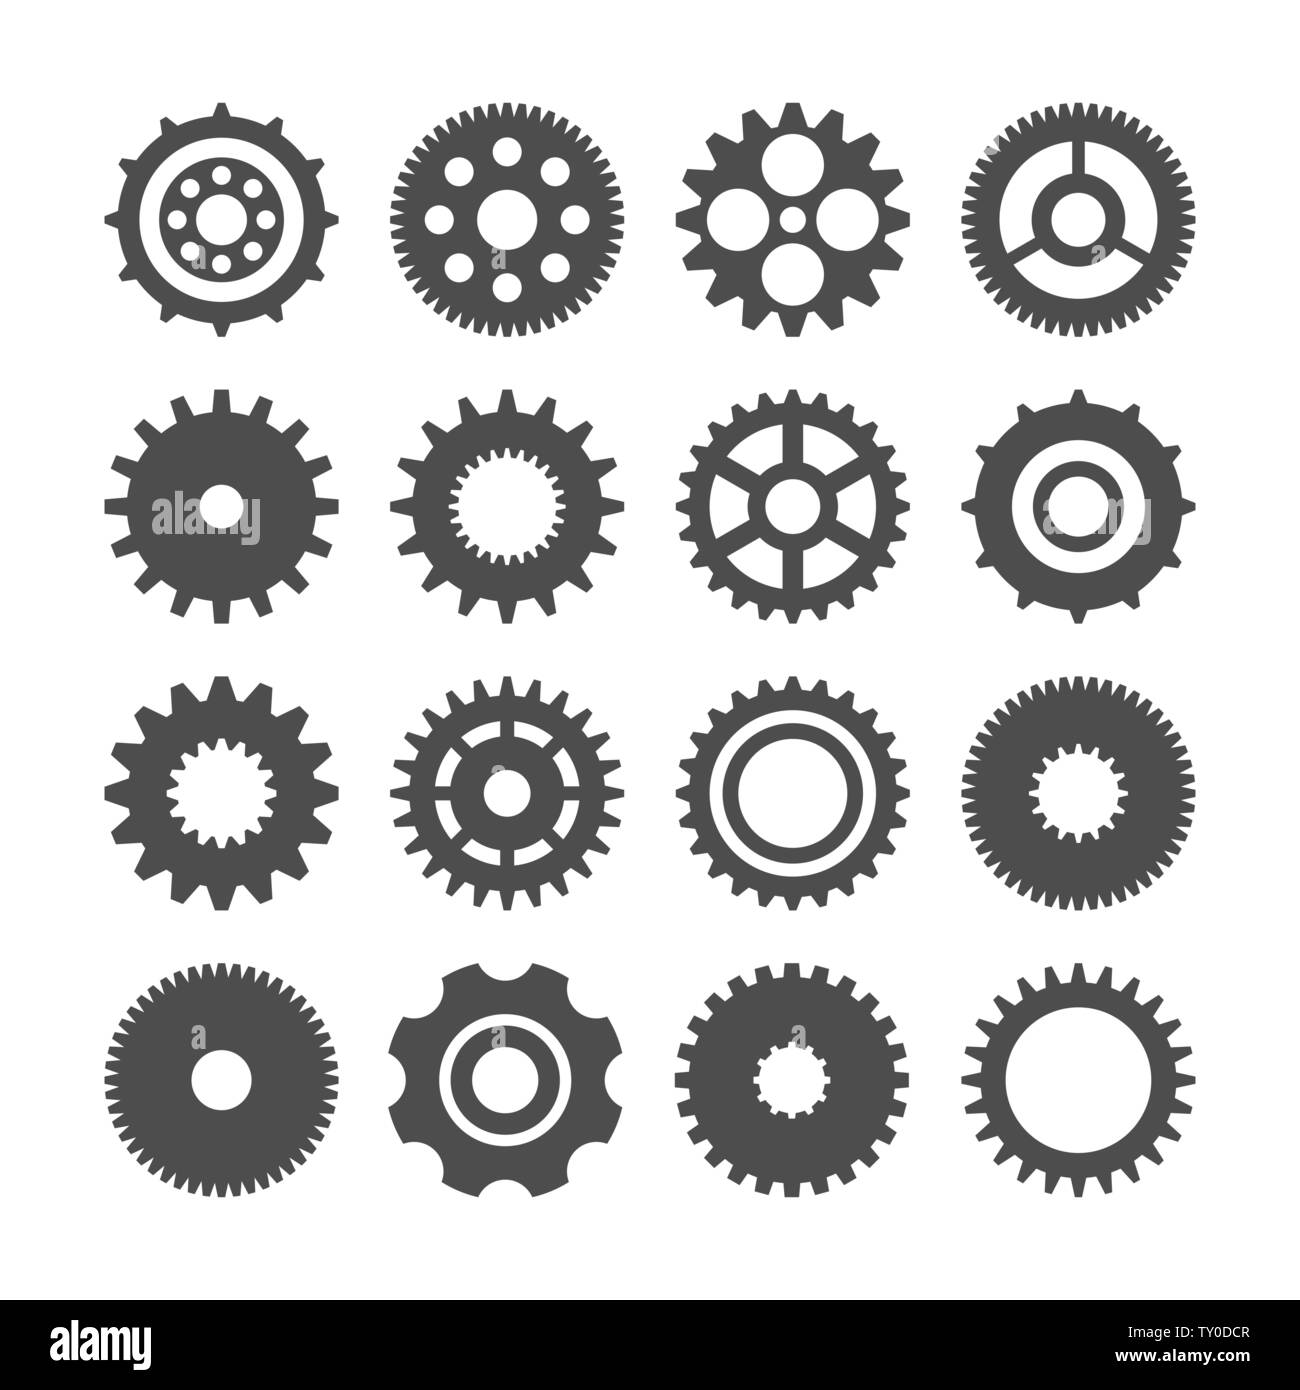 Gear wheels set. Retro vintage cogwheels collection. Industrial icons. Vector illustration Stock Vector